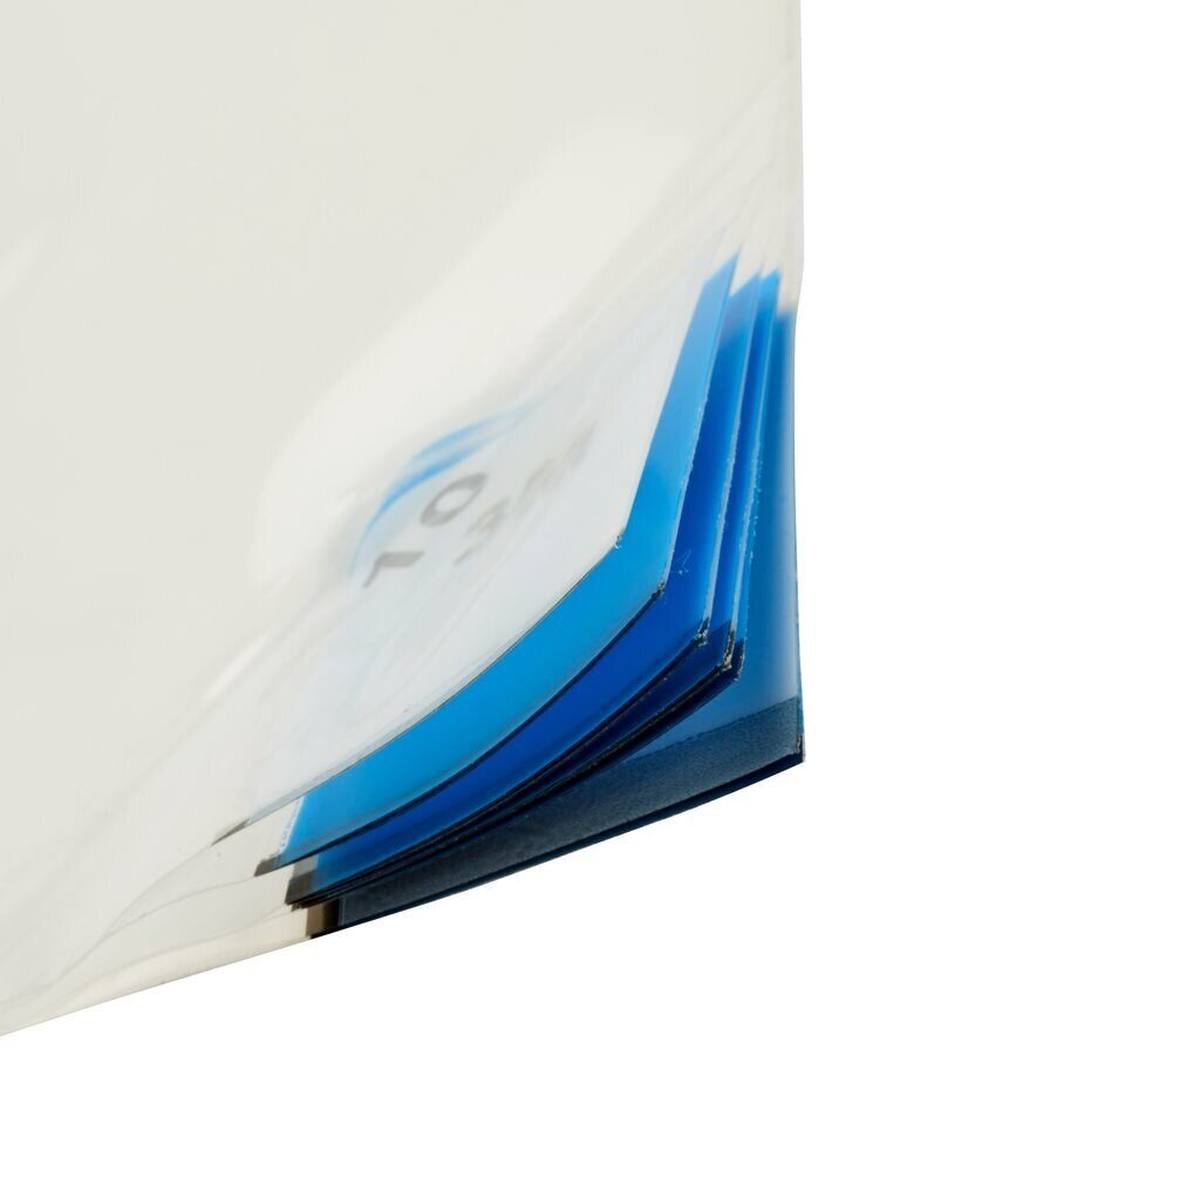 3M 4300 Nomad Alfombrilla adhesiva para polvo fino, blanca, 1,15 m x 0,6 m, 40 capas de polietileno transparente